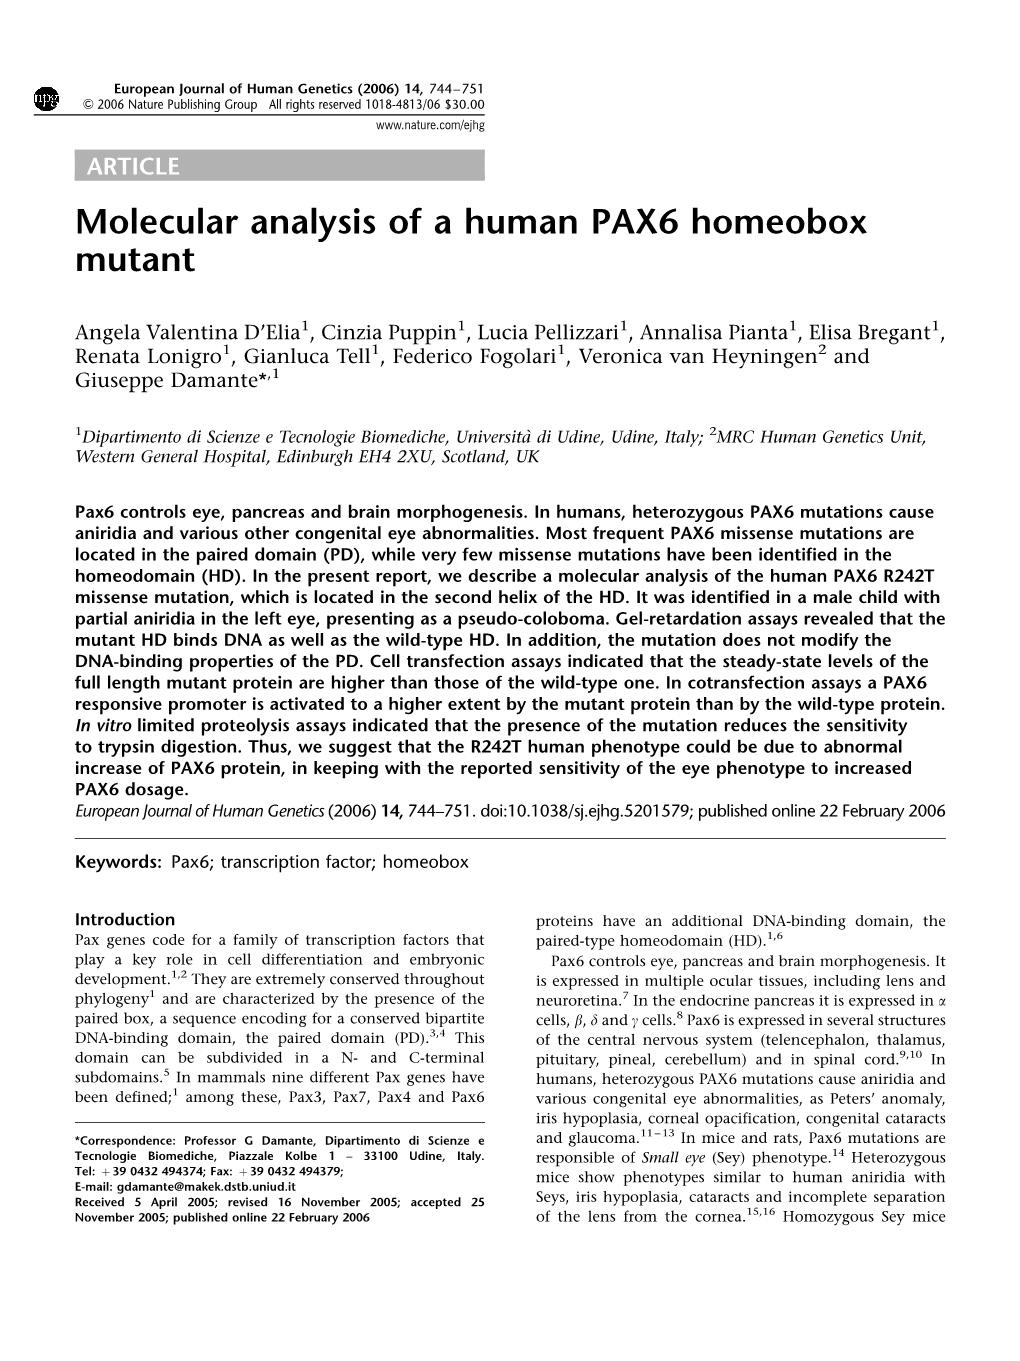 Molecular Analysis of a Human PAX6 Homeobox Mutant